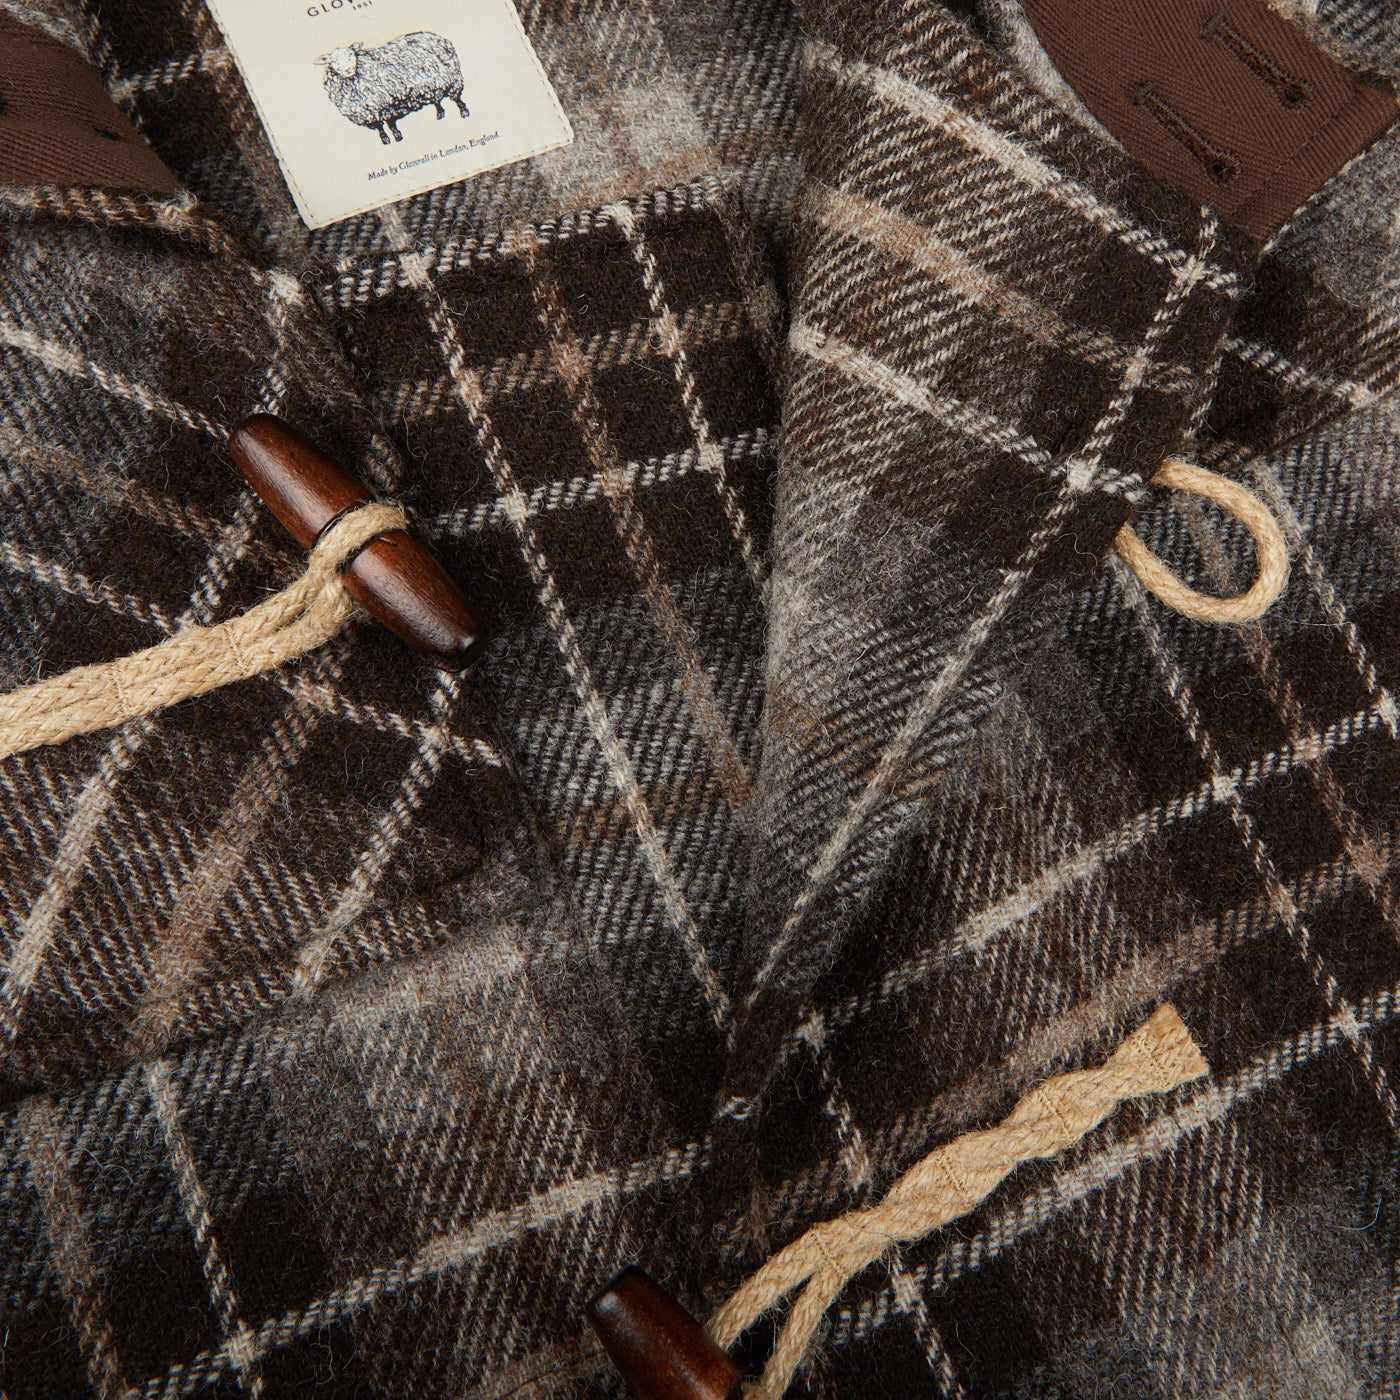 A close up of a De Bonne Facture Brown Undyed Shepherds Check Wool Duffle Coat.